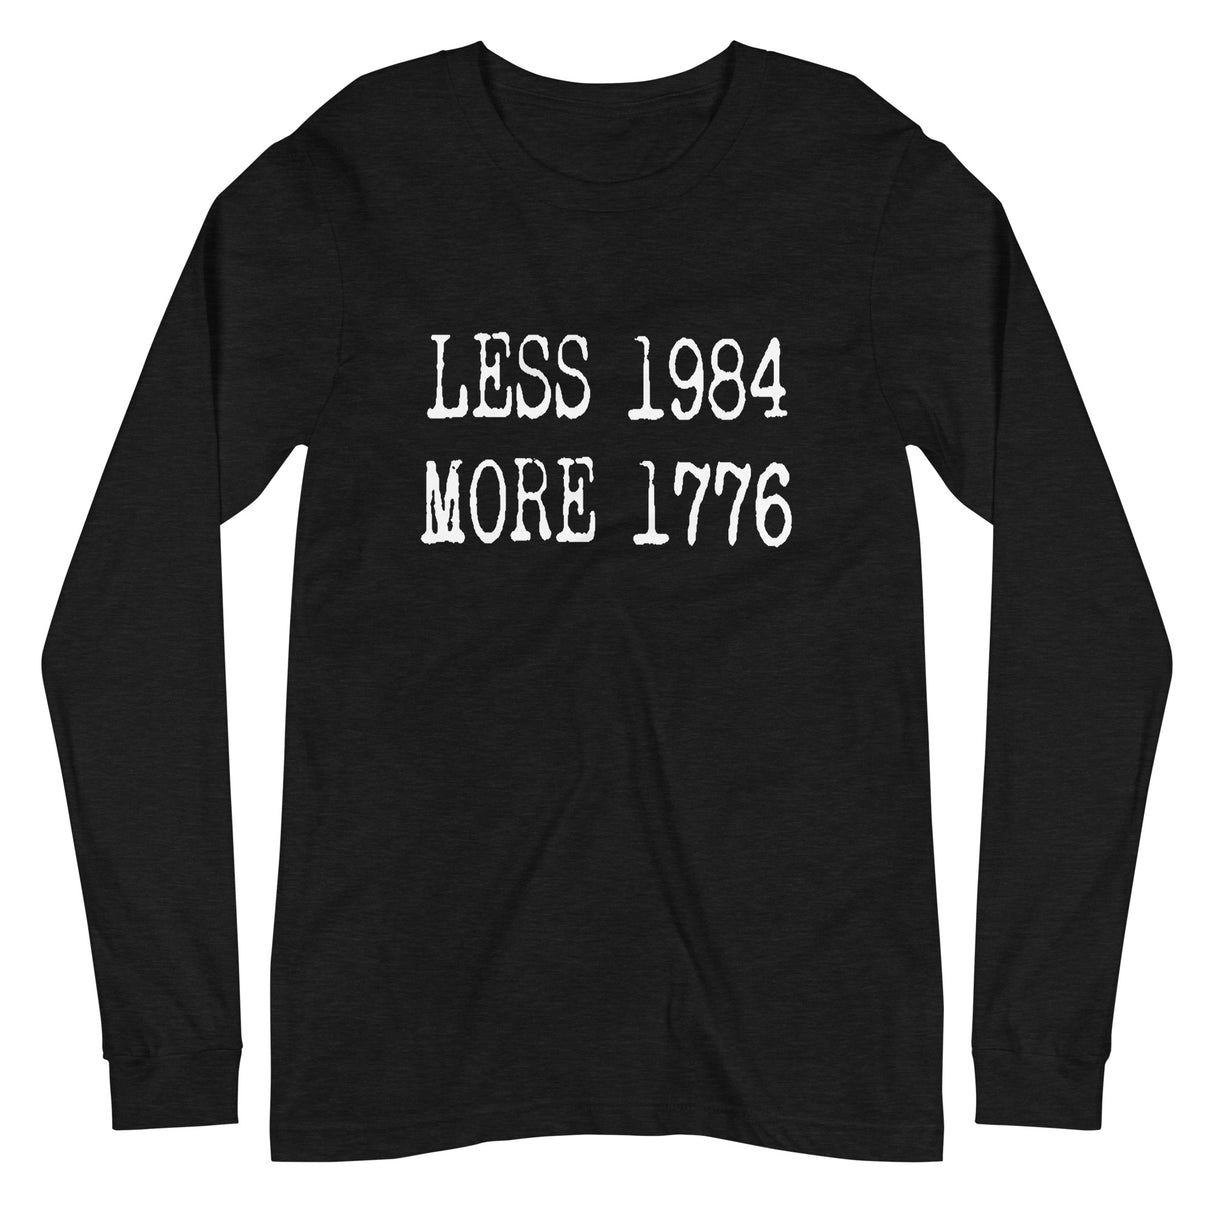 Less 1984 More 1776 Long Sleeve Shirt